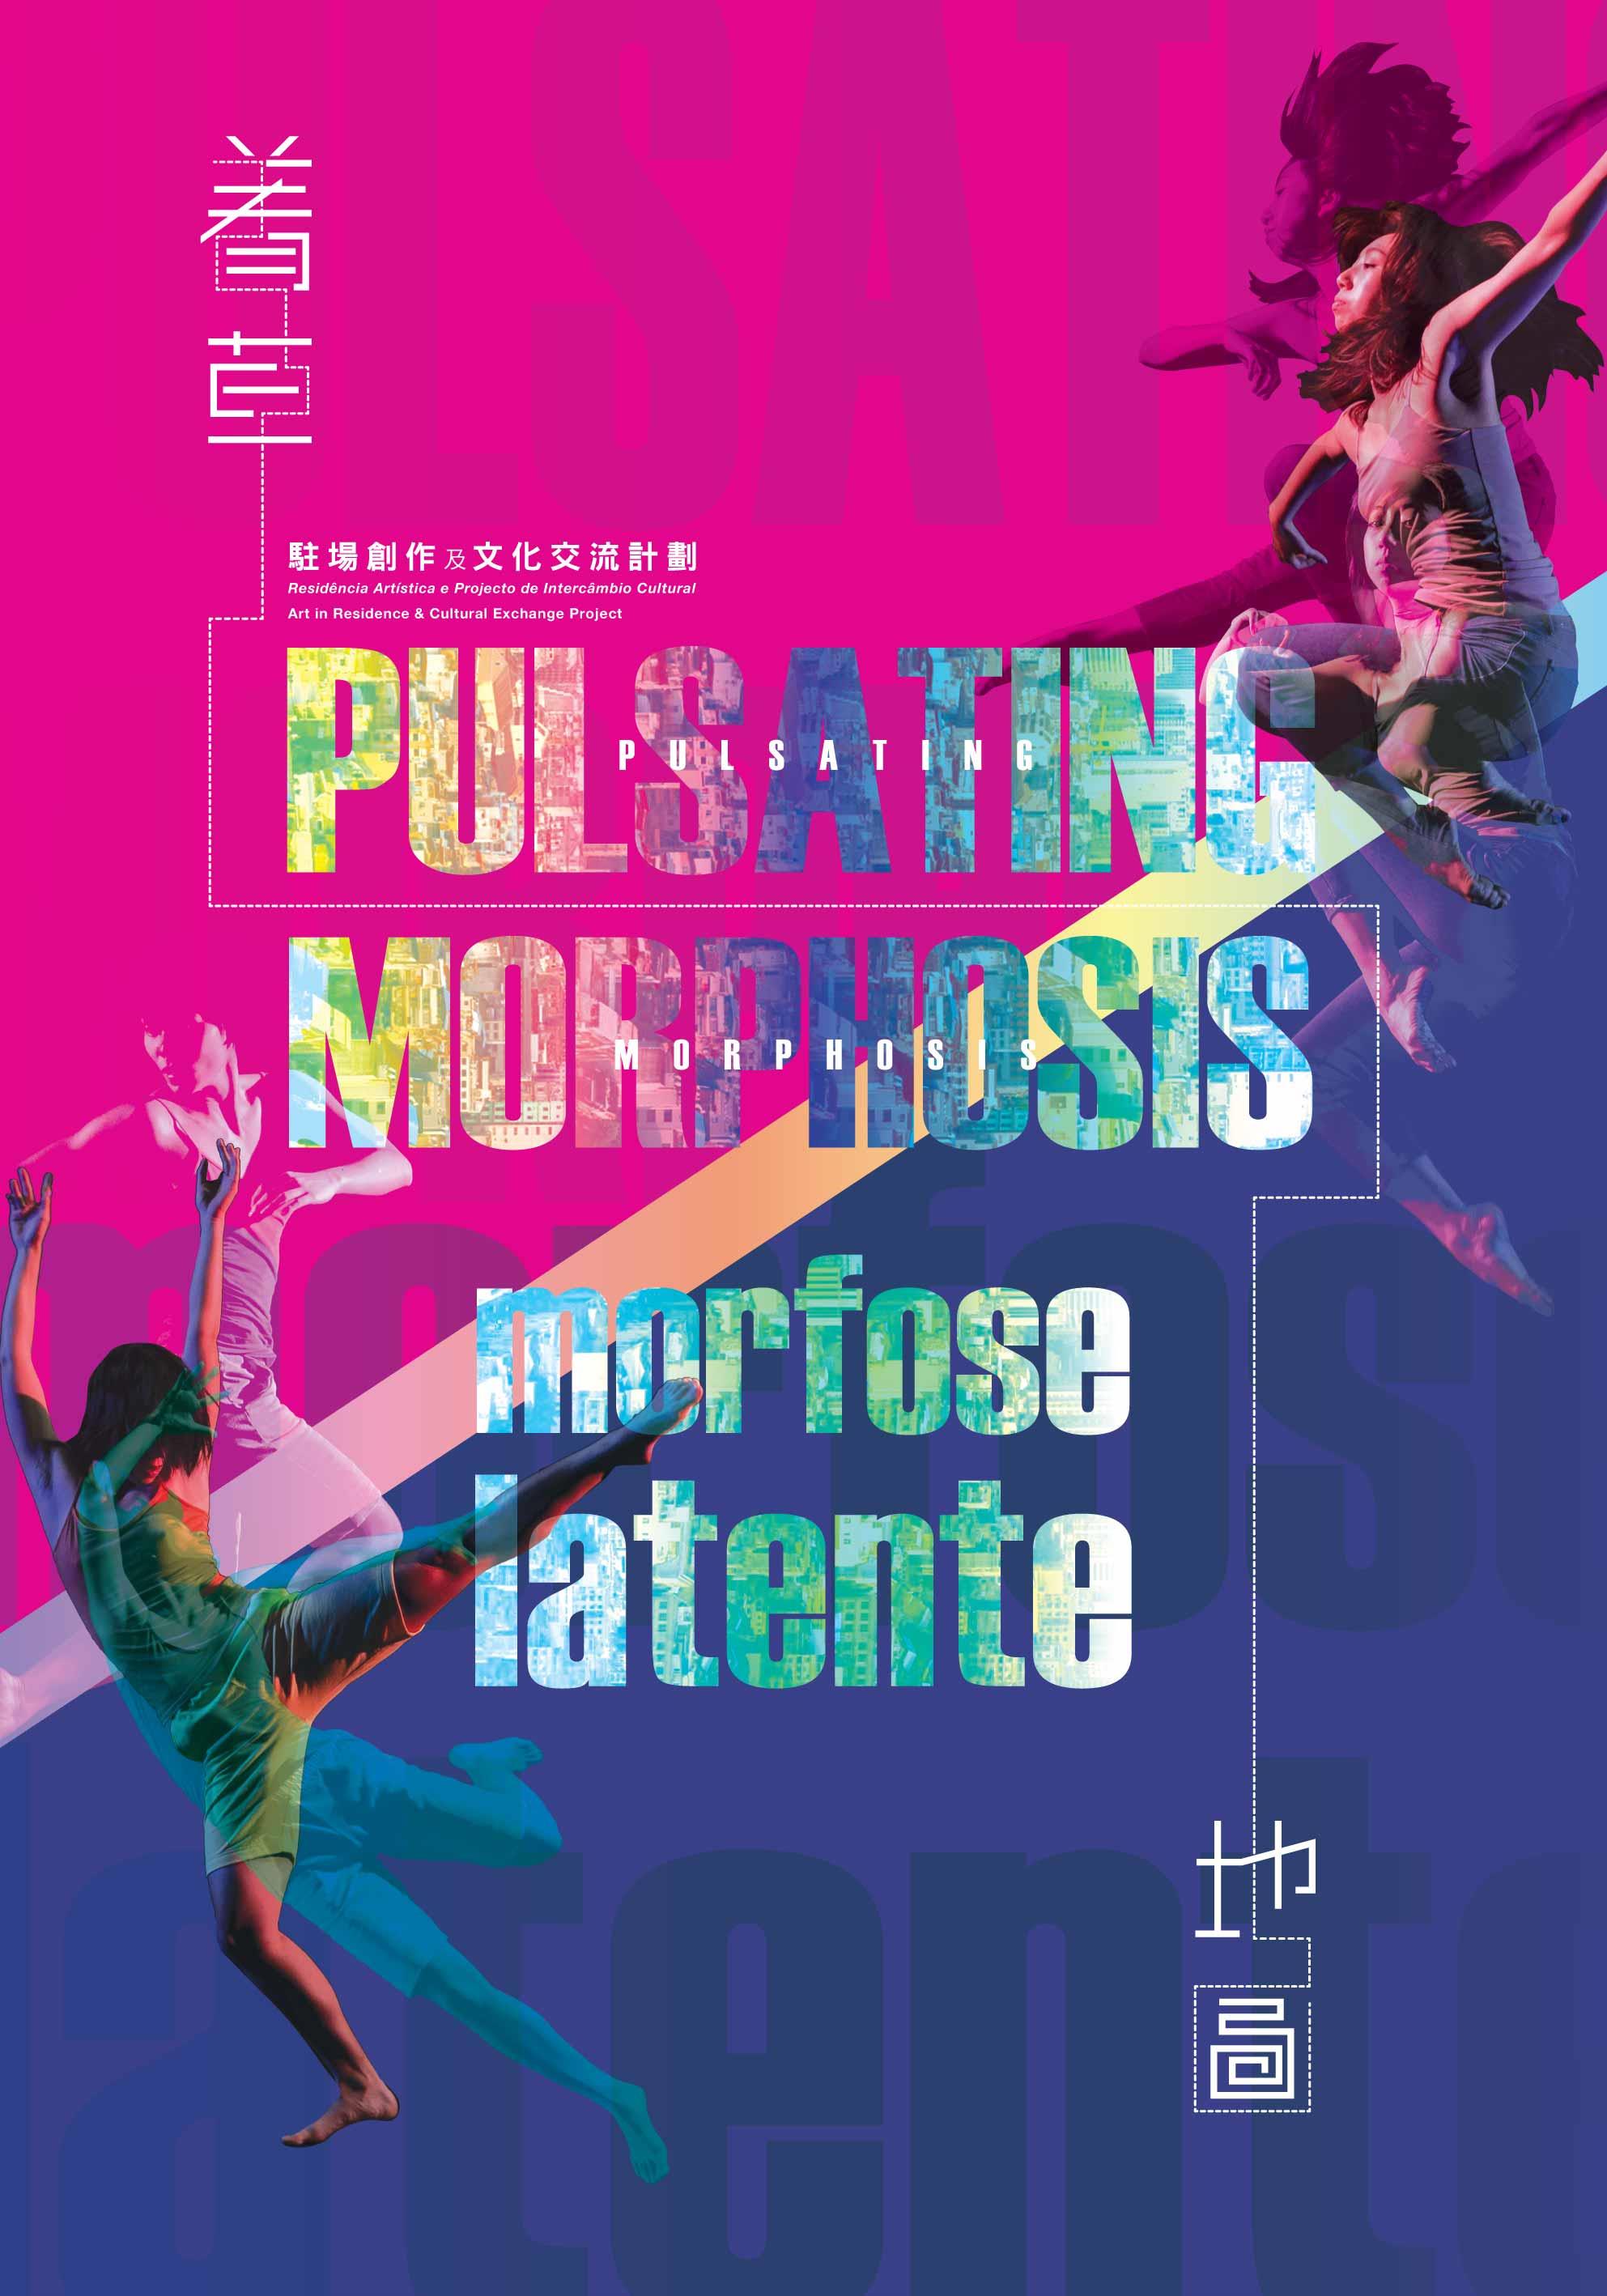 pulsating morphosis dance poster